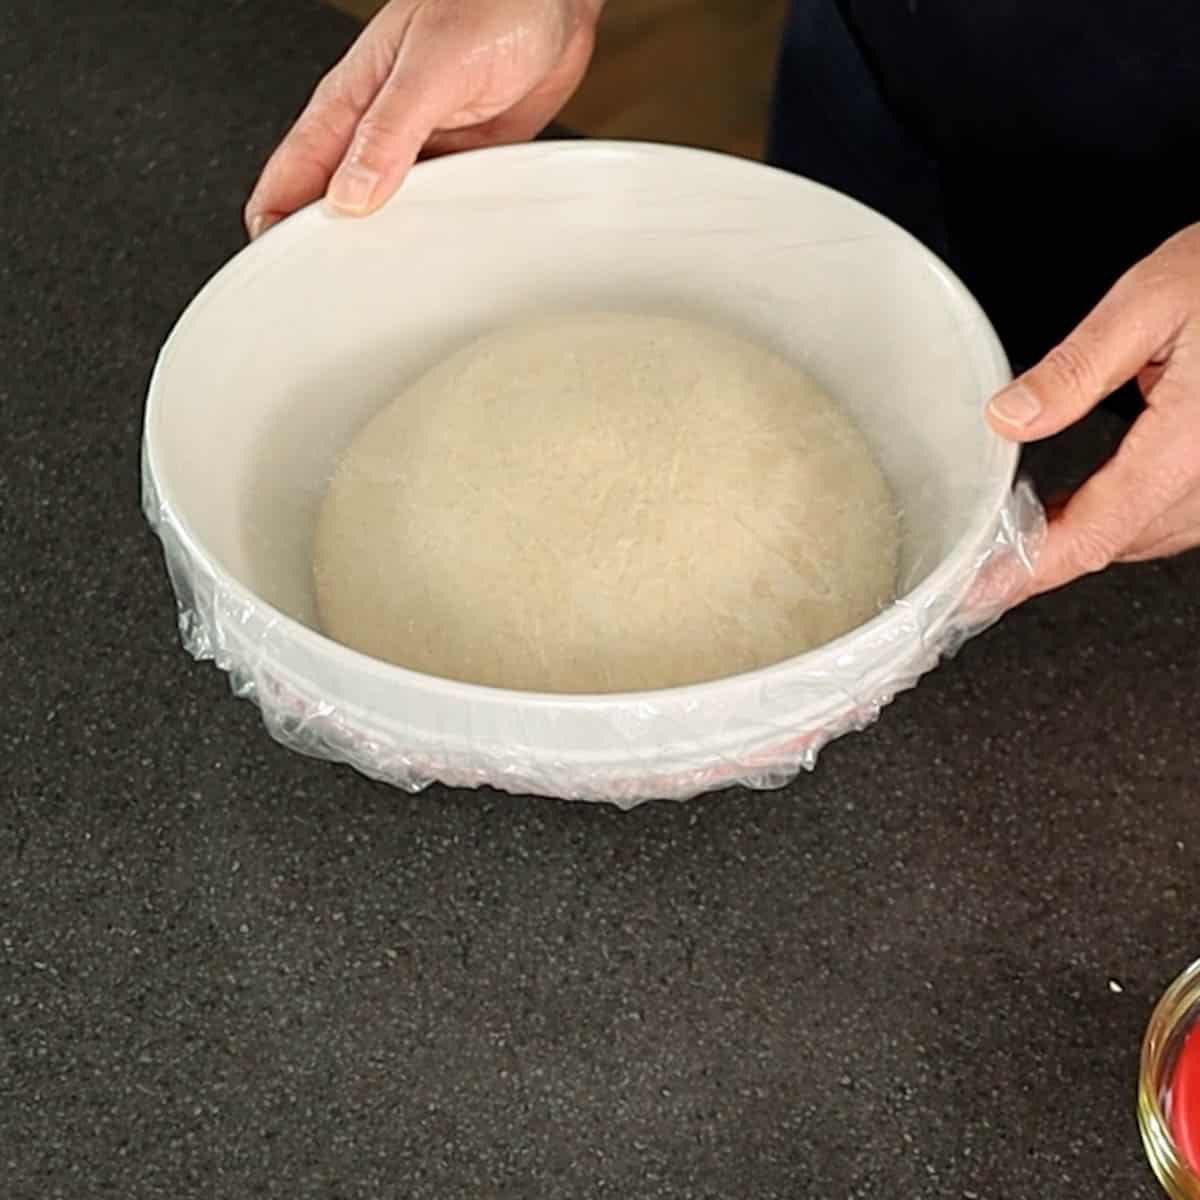 Sourdough flatbread dough ball in a white bowl with plastic bonnet proofing.